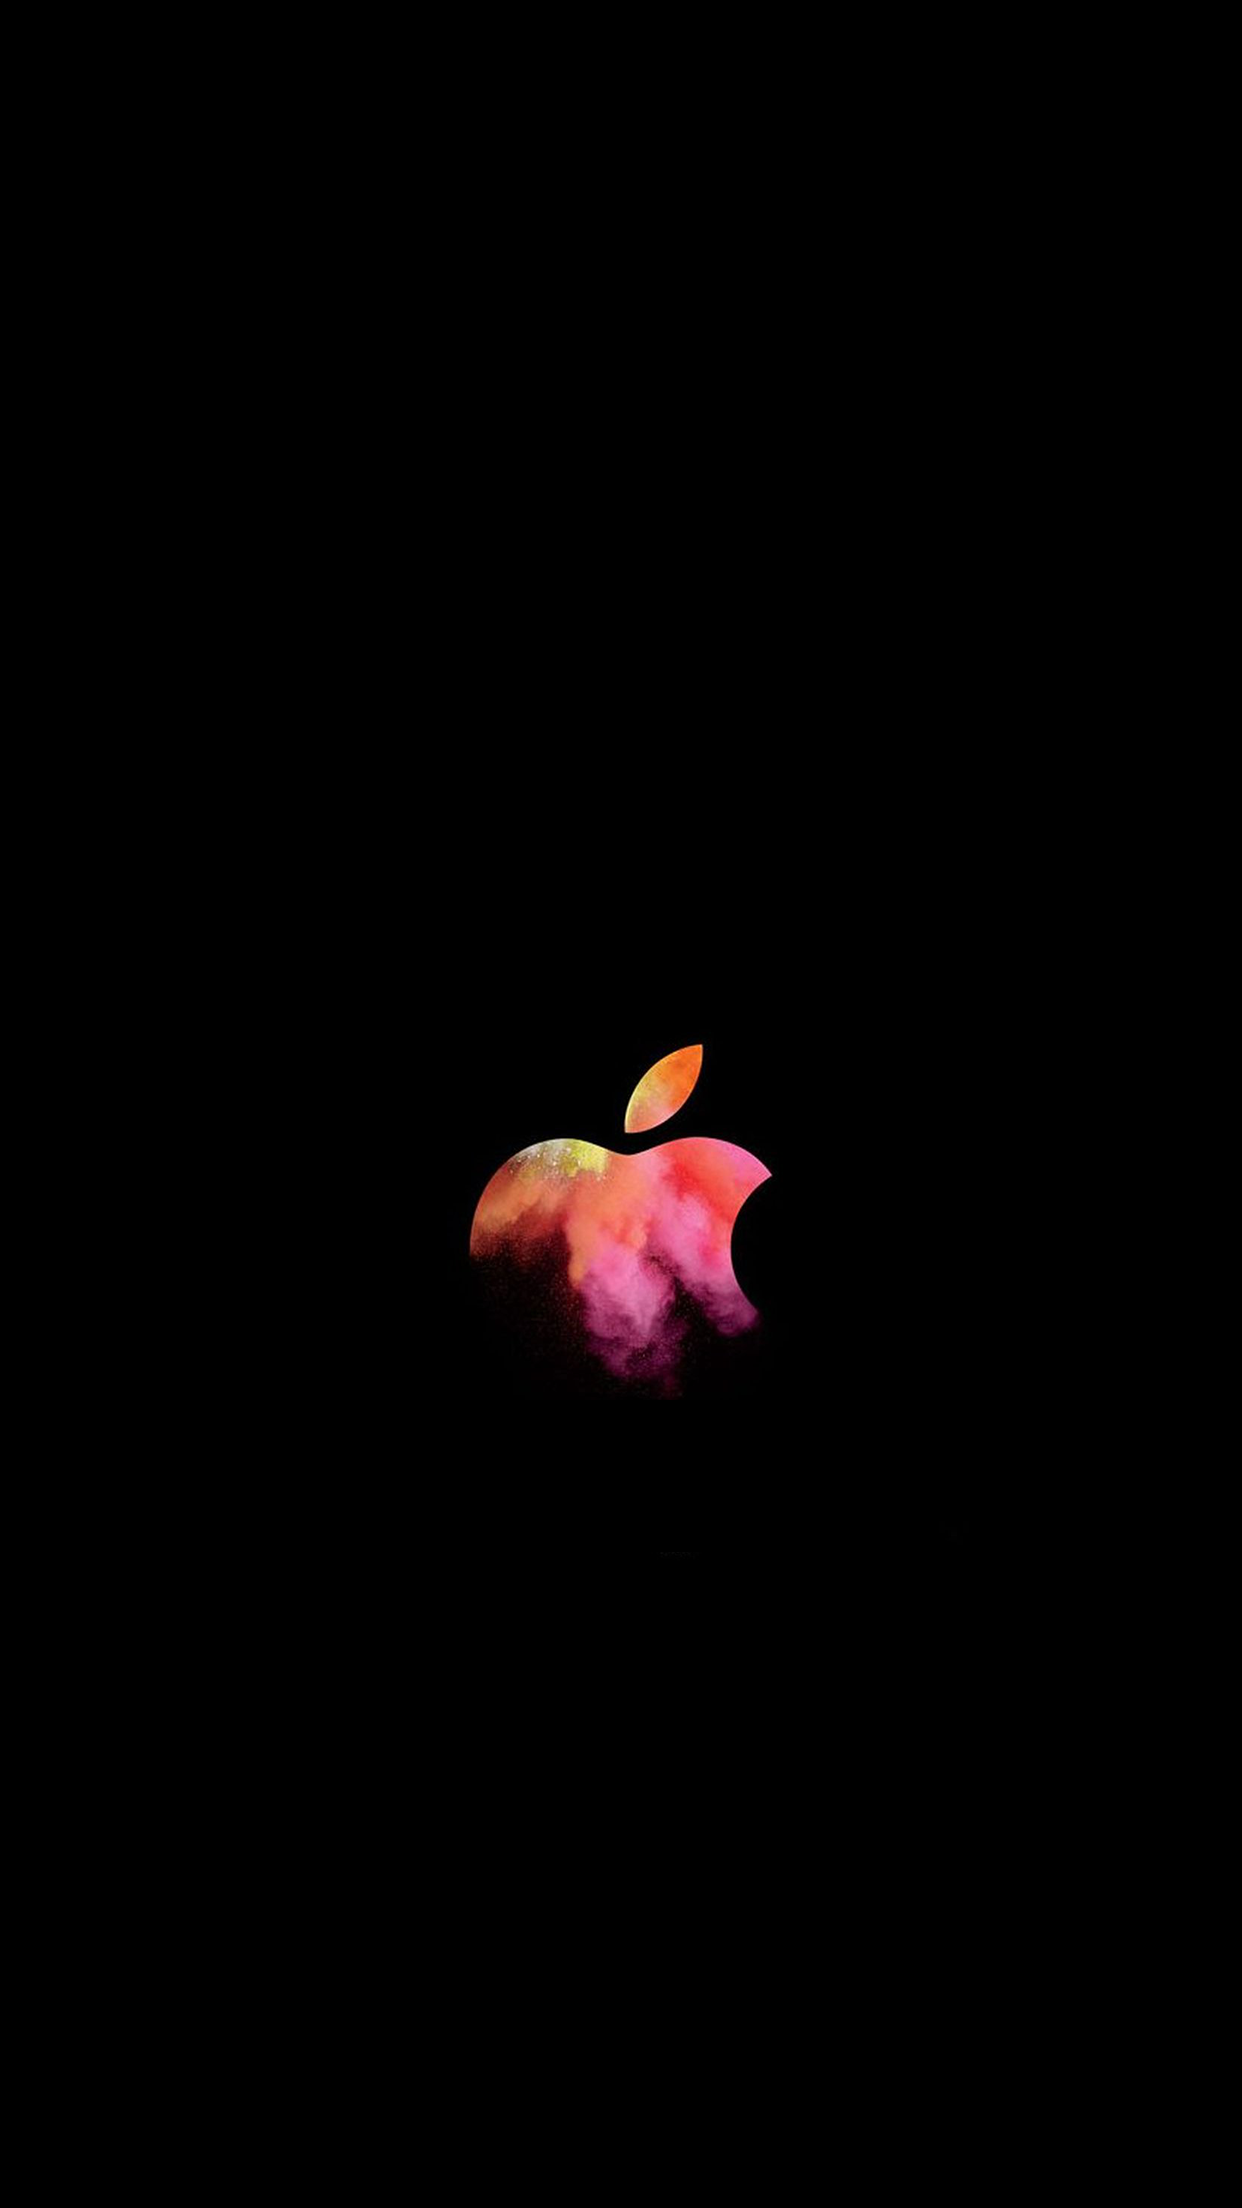 apple-october-27-event-wallpaper-hello-again-ar72014-no-phrase